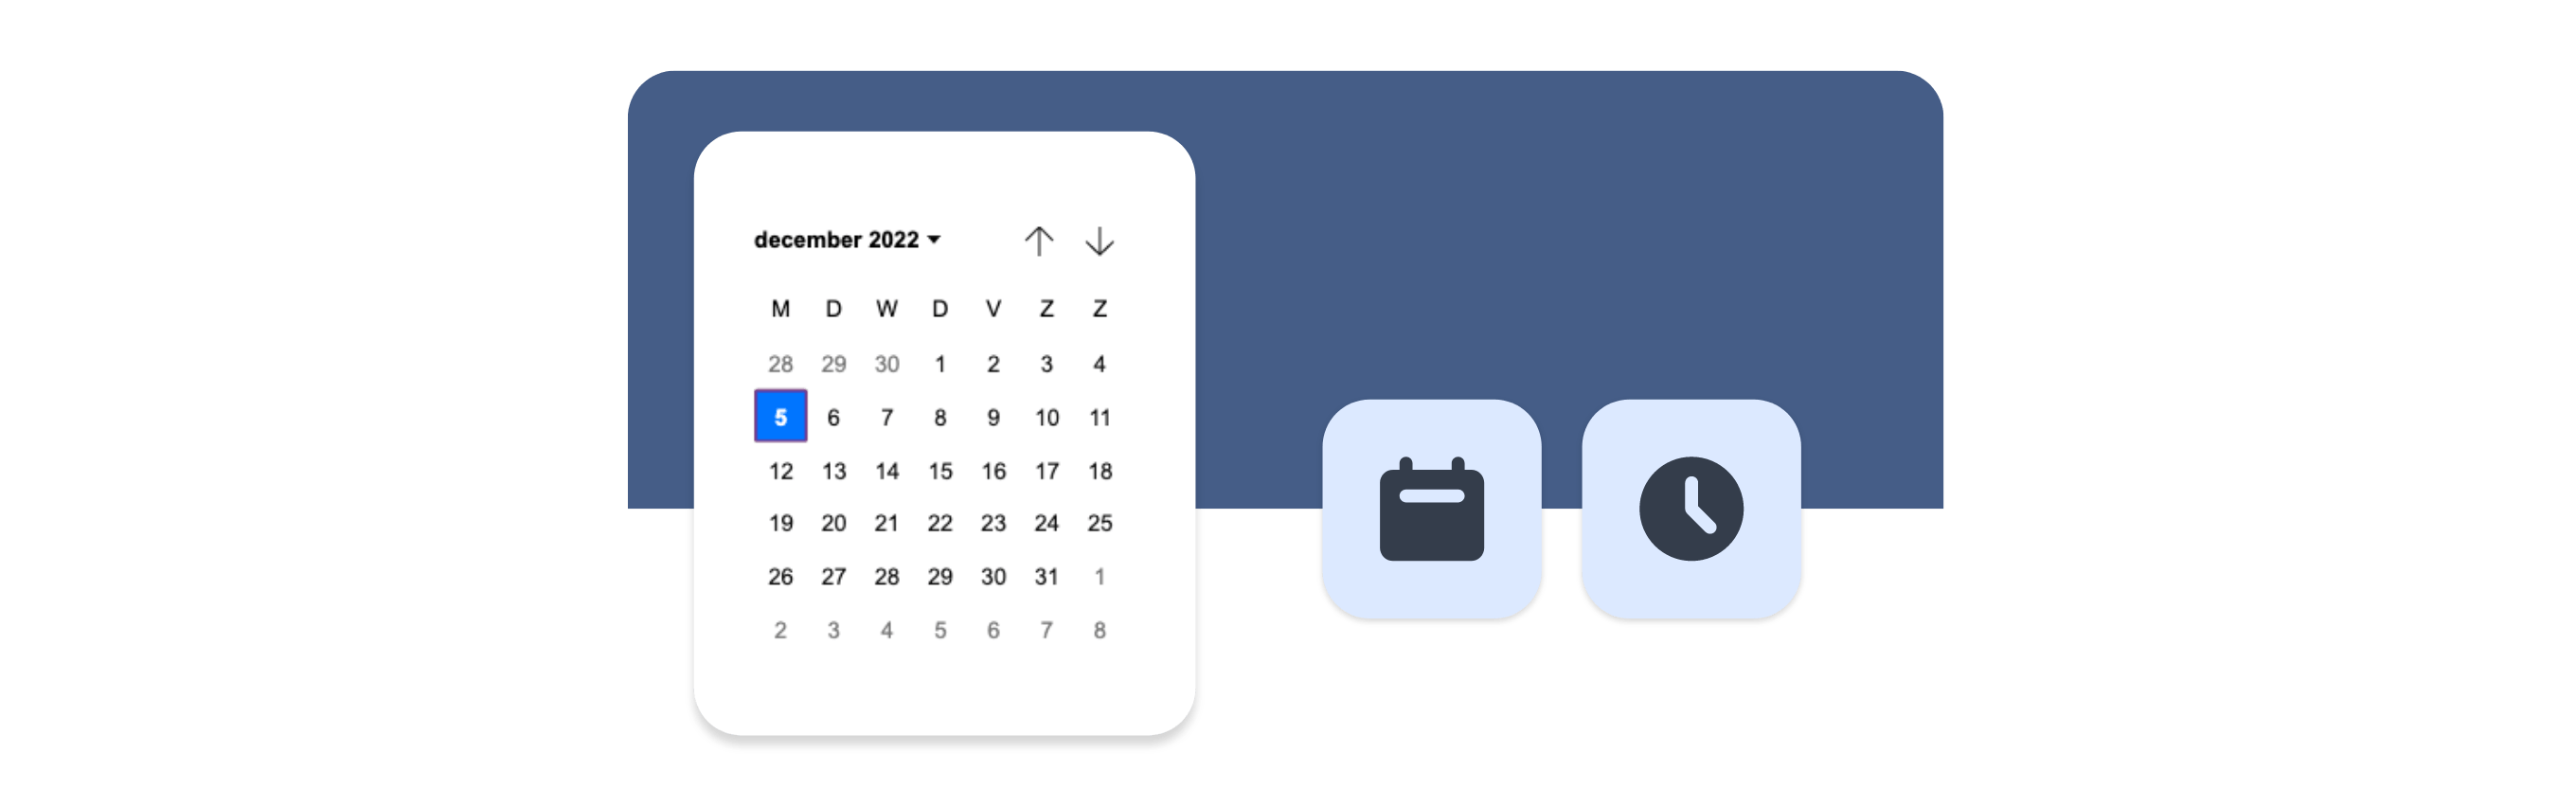 Improved Form Builder widgets like the Date-widget MoreApp